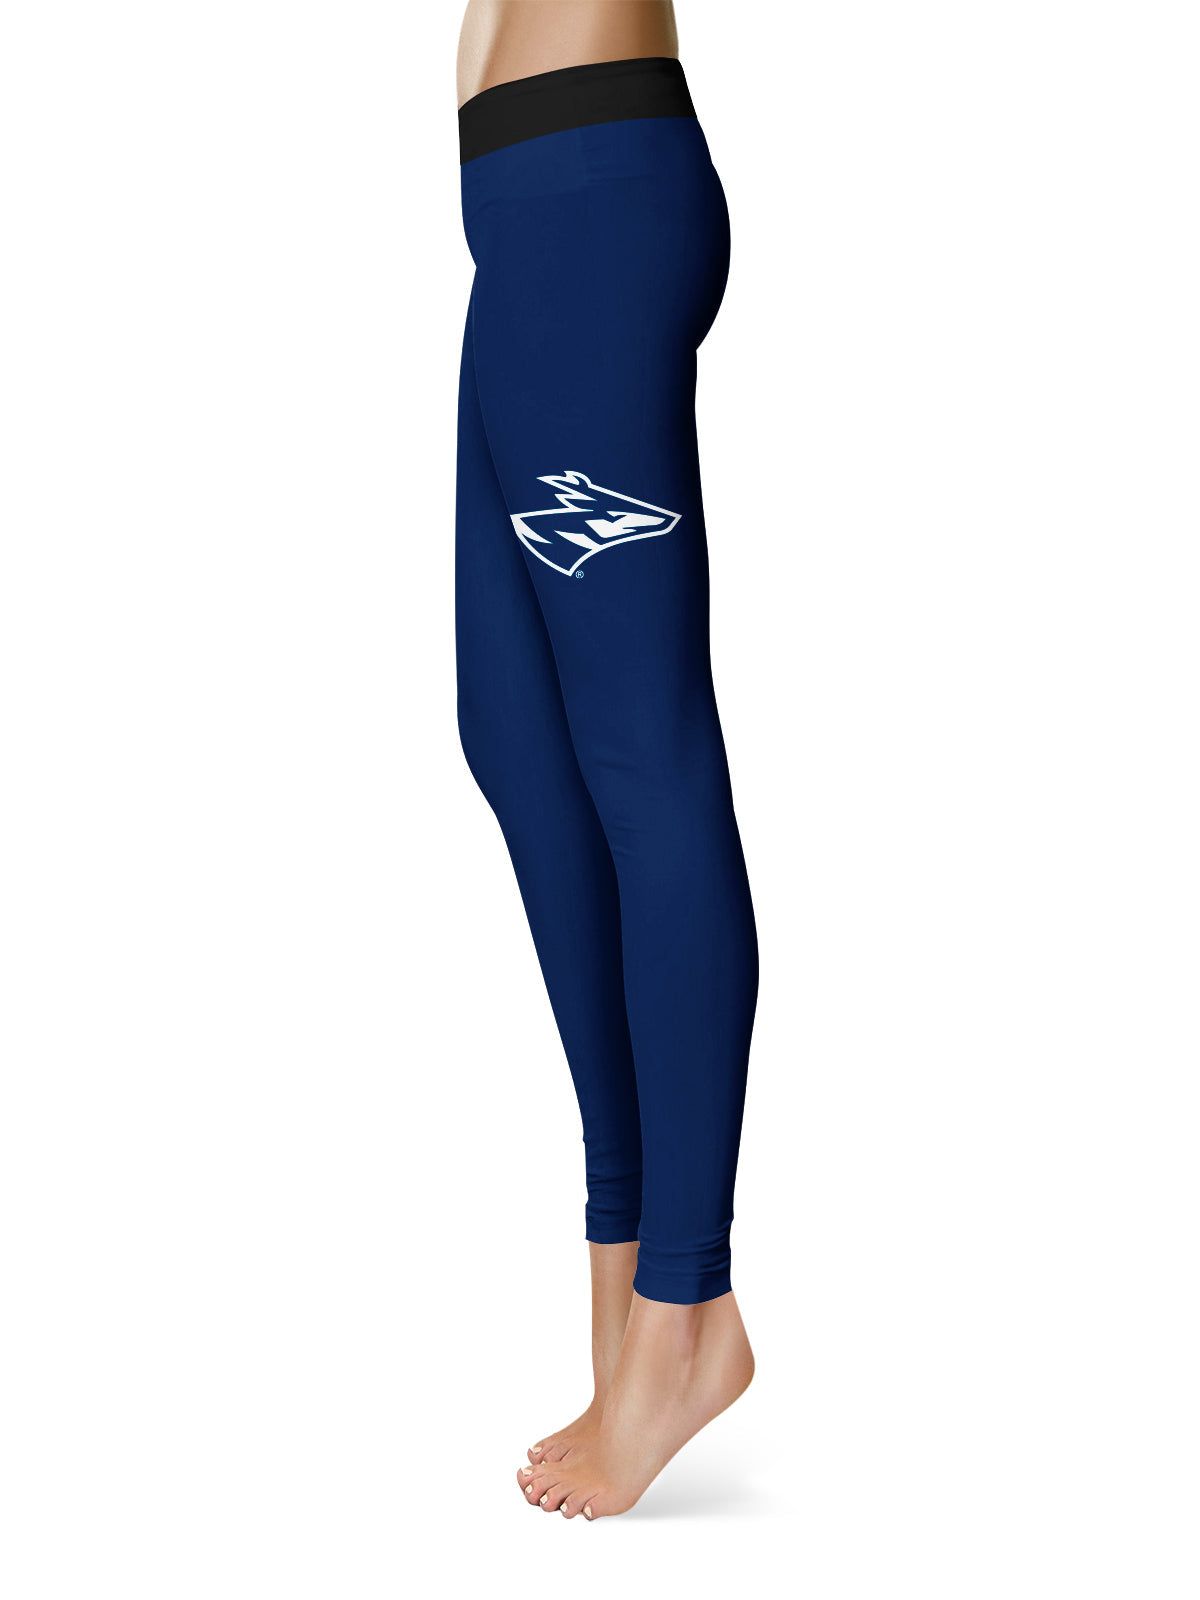 Nebraska-Kearney Lopers UNK Vive La Fete Game Day Collegiate Logo on Thigh Blue Women Yoga Leggings 2.5 Waist Tights